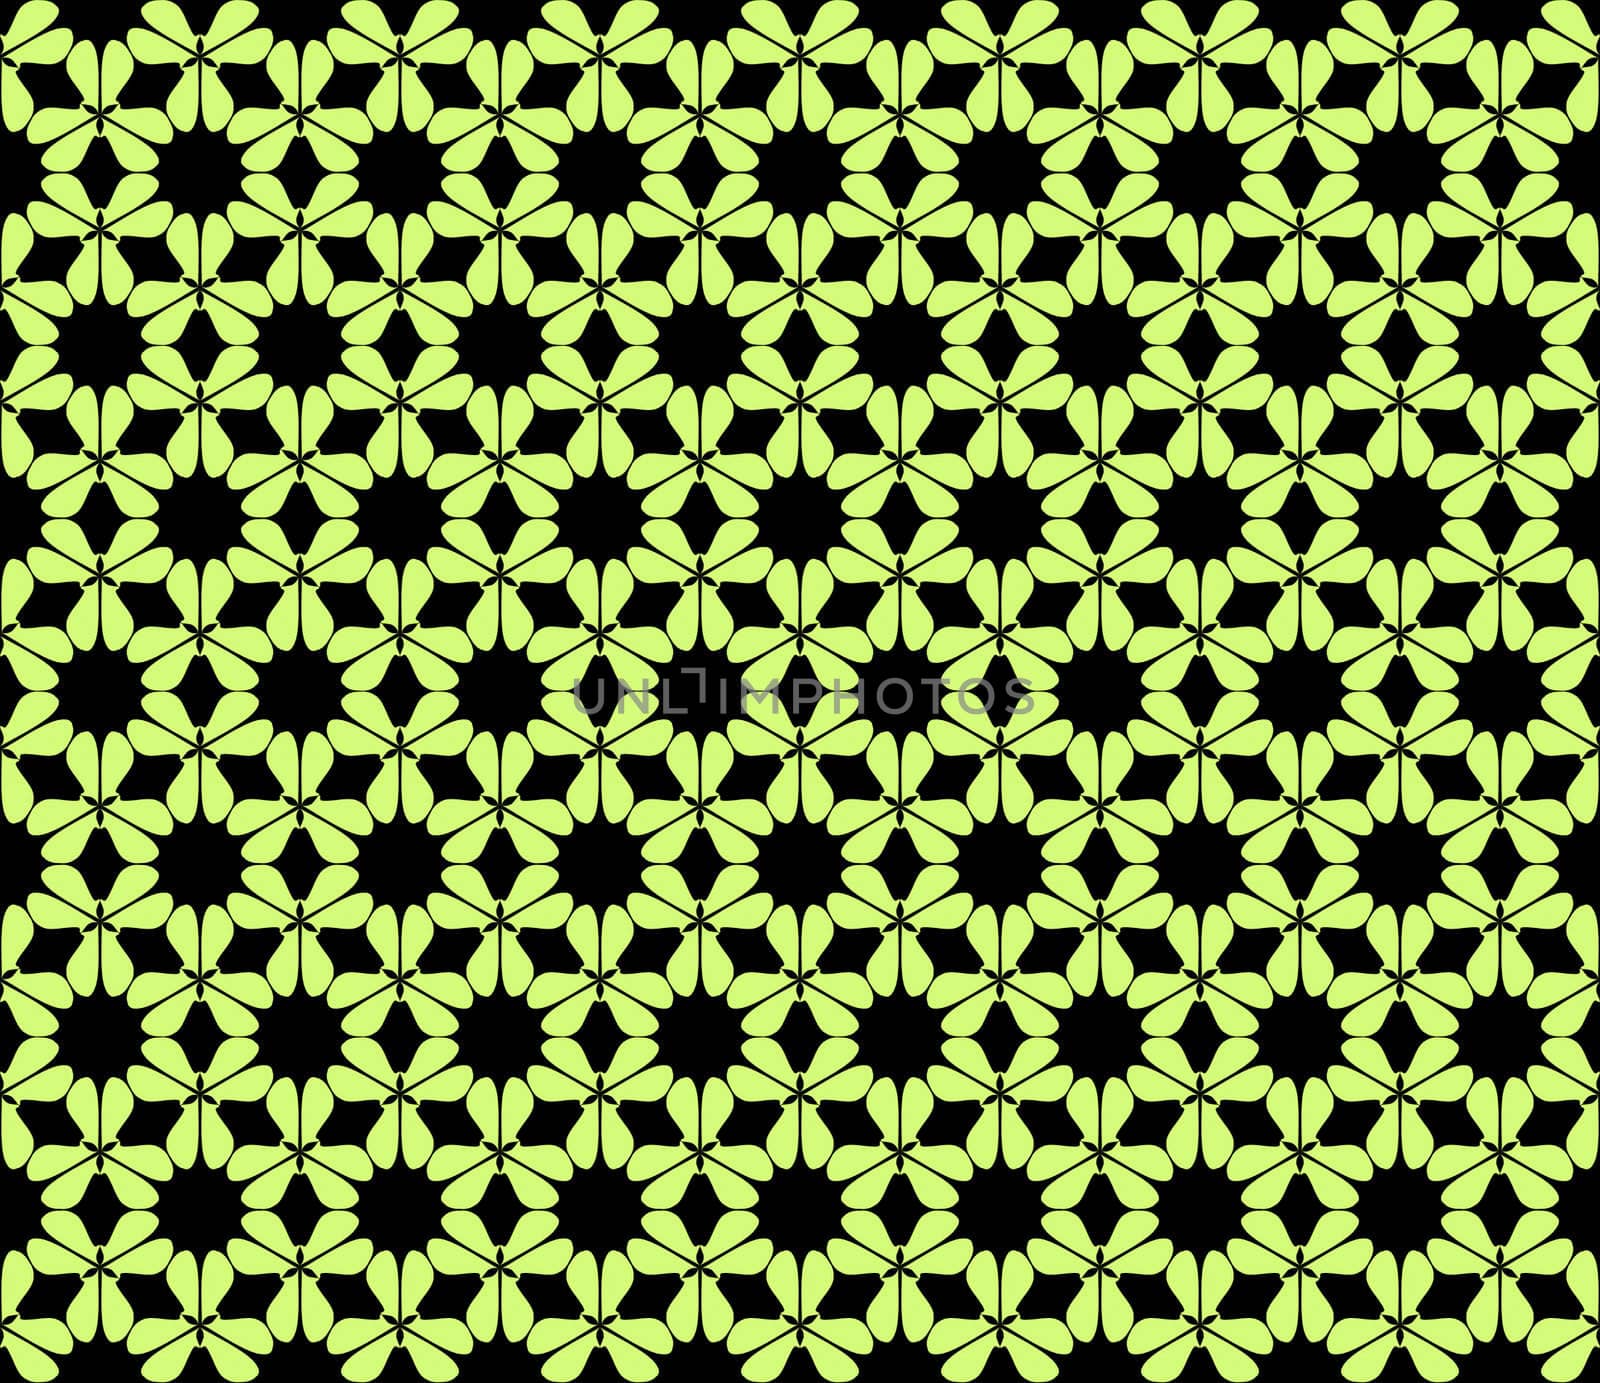 Wallpaper pattern by Nickondr